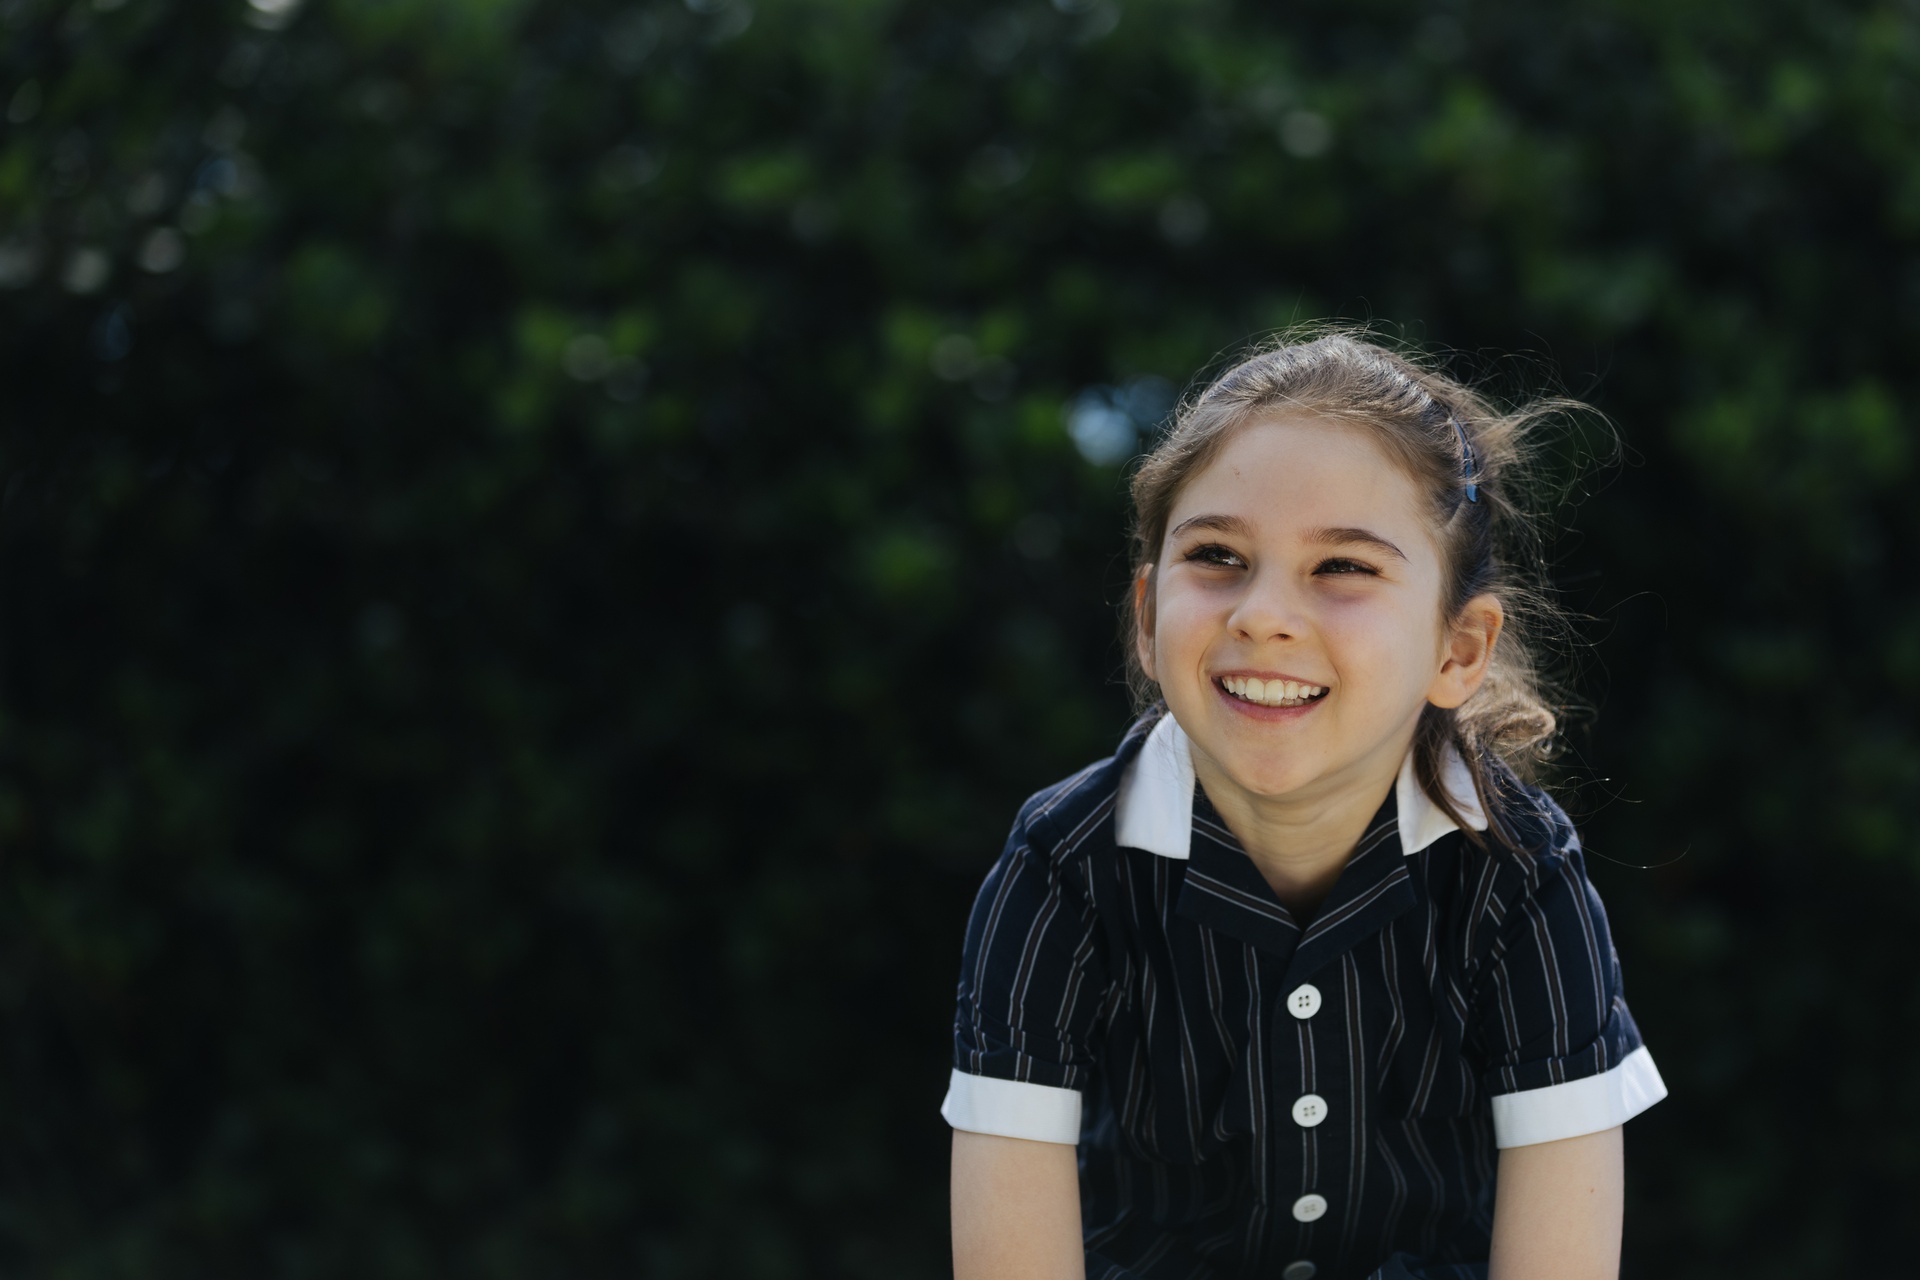 Smiling Marsden Park primary school student in ACC uniform